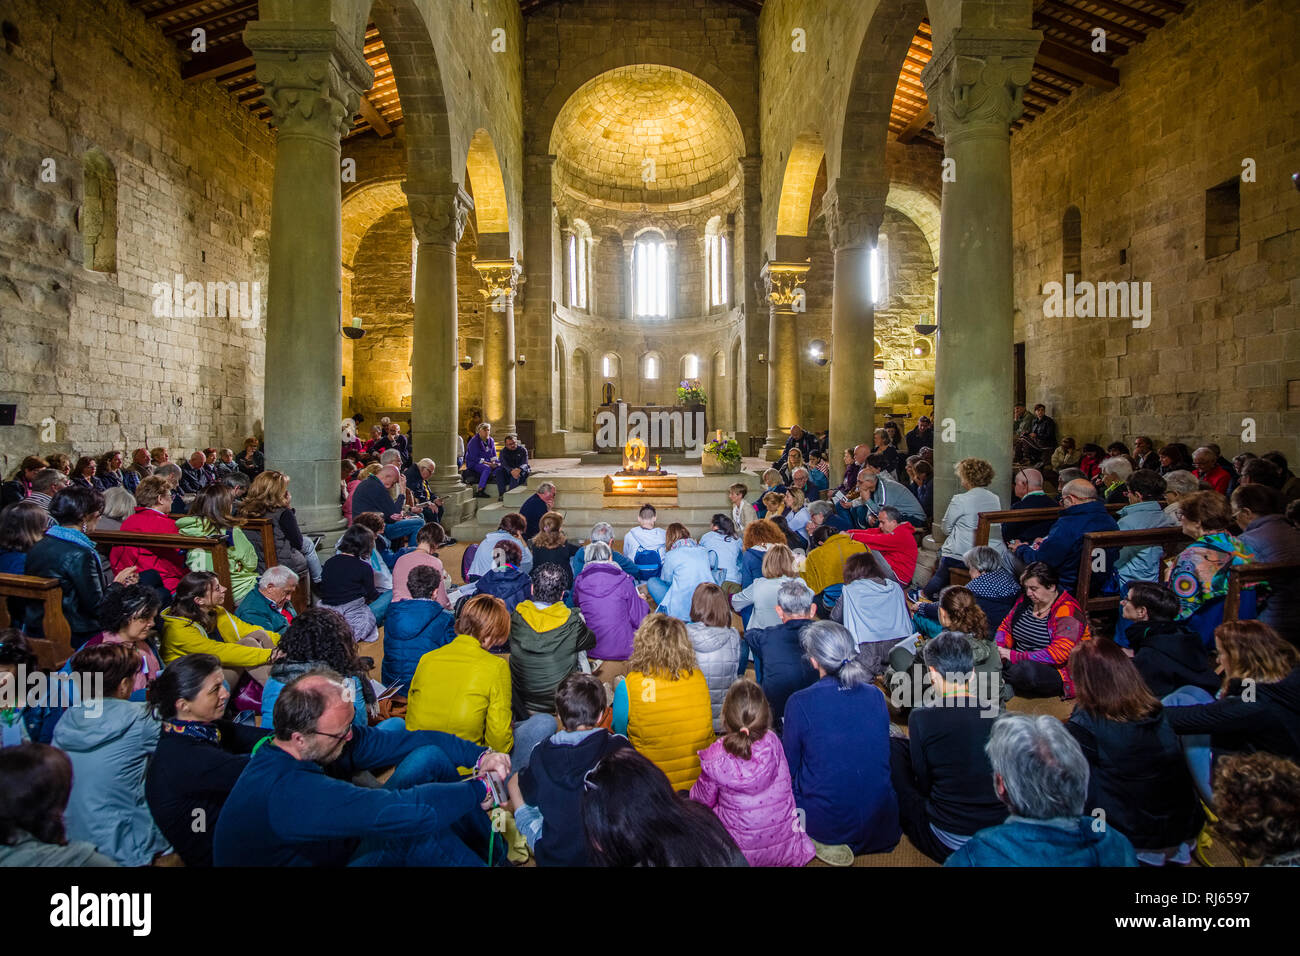 People are gathering and praying inside the church Pieve di San Pietro a Romena Stock Photo